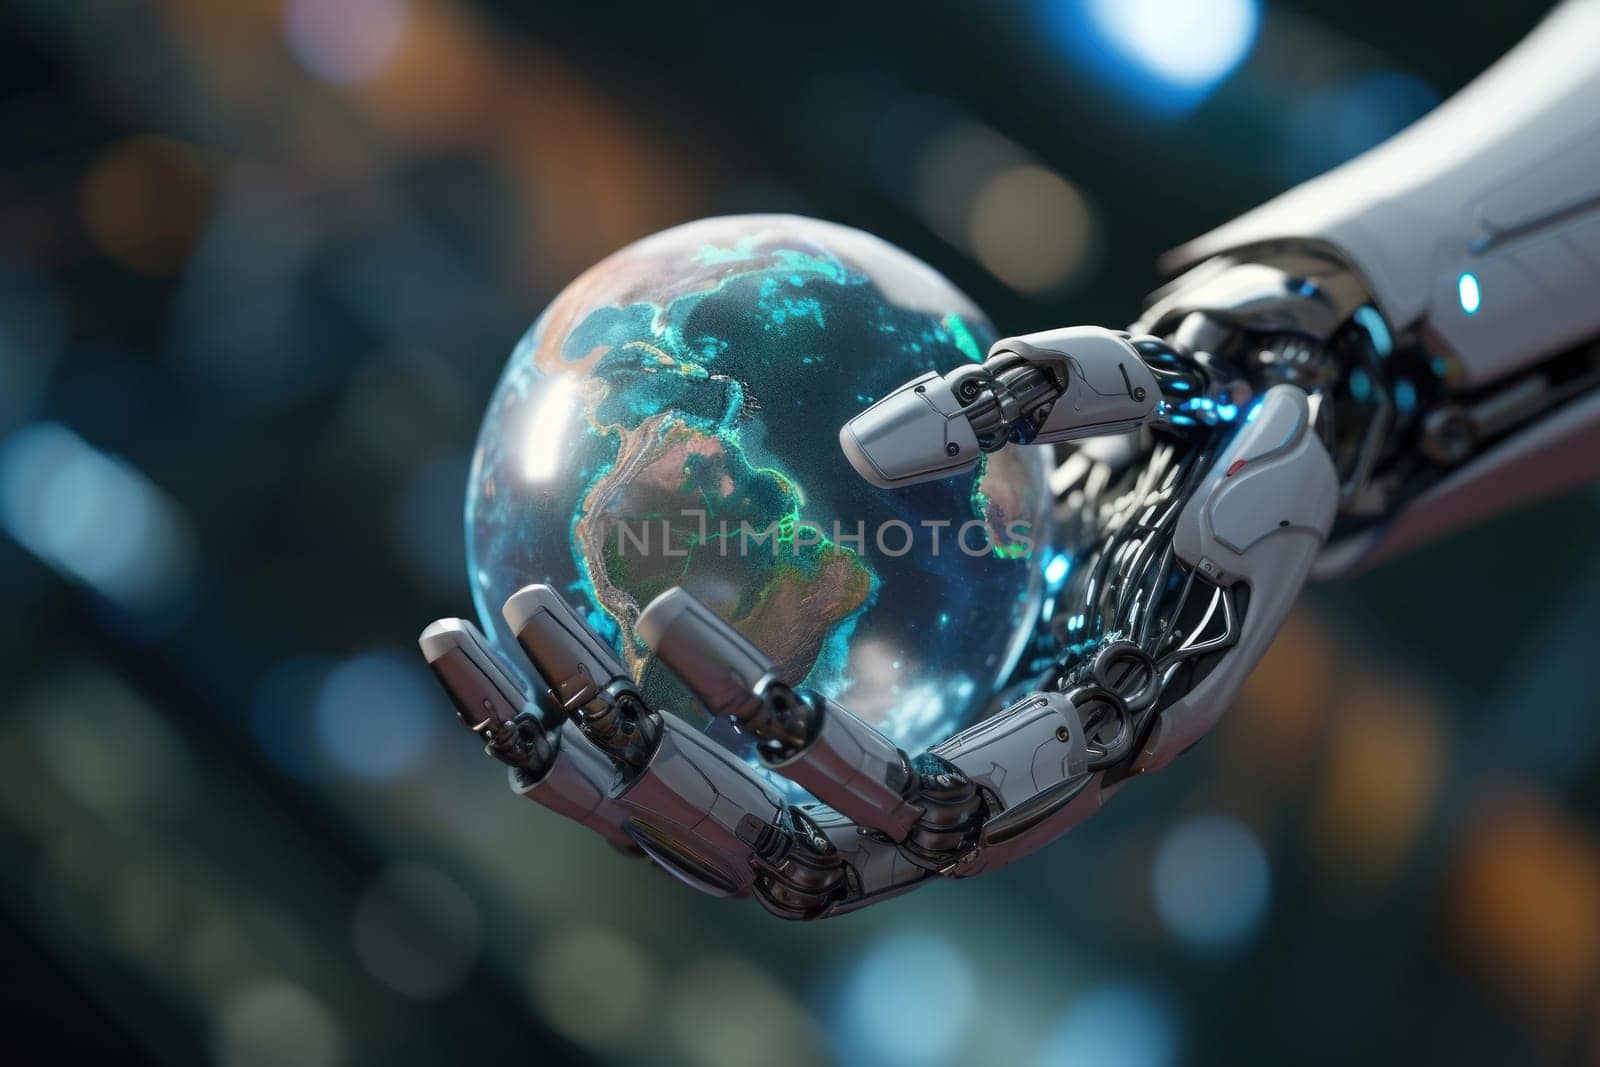 Mechanical robot hand gripping a globe, futuristic technology background. Generative AI.